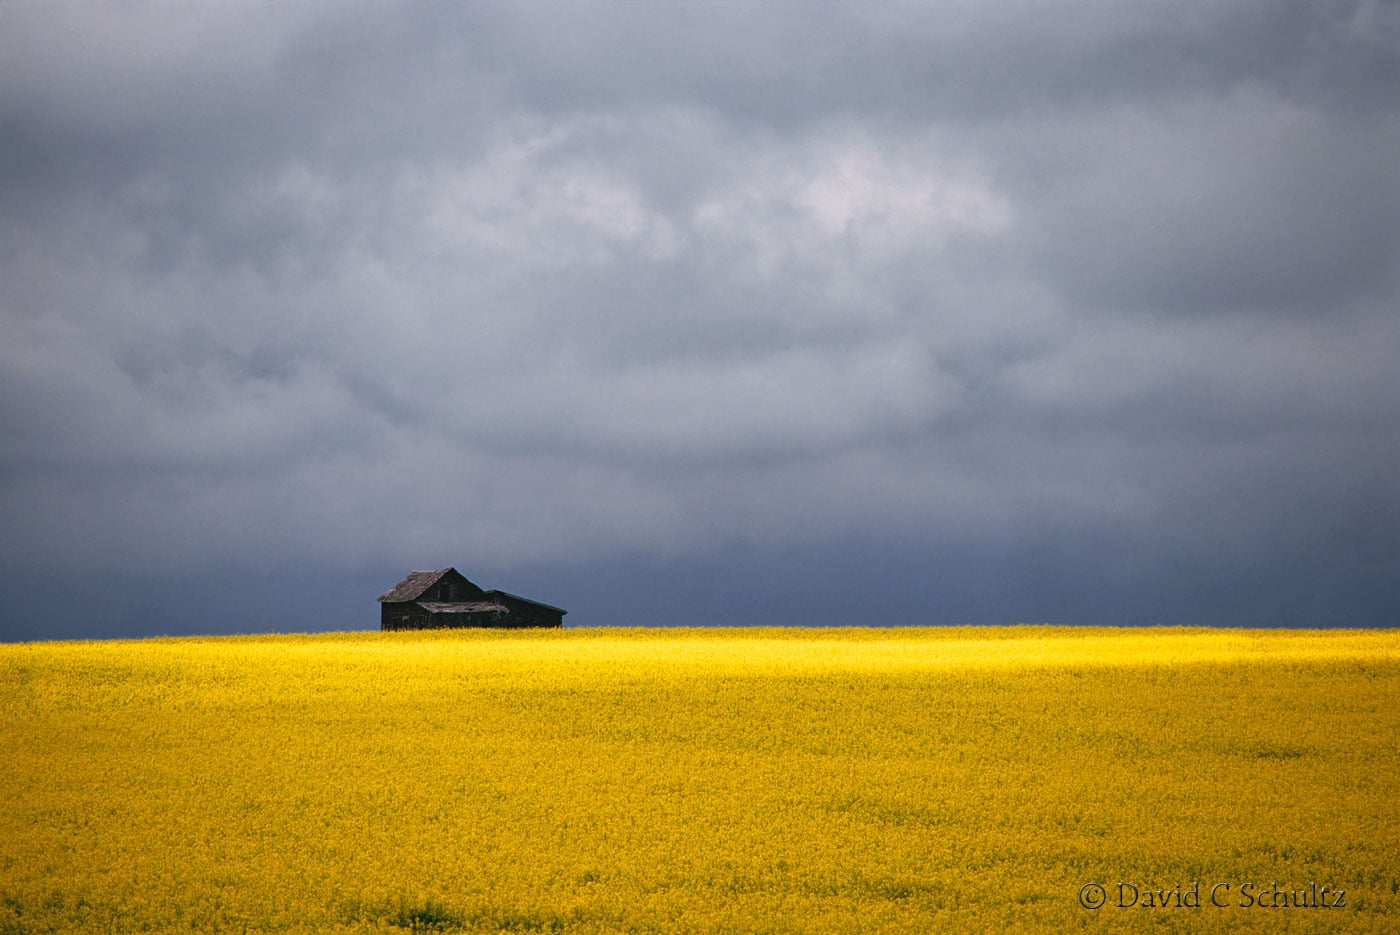 Canola field in bloom in Alberta, Canada - Image #7-1376